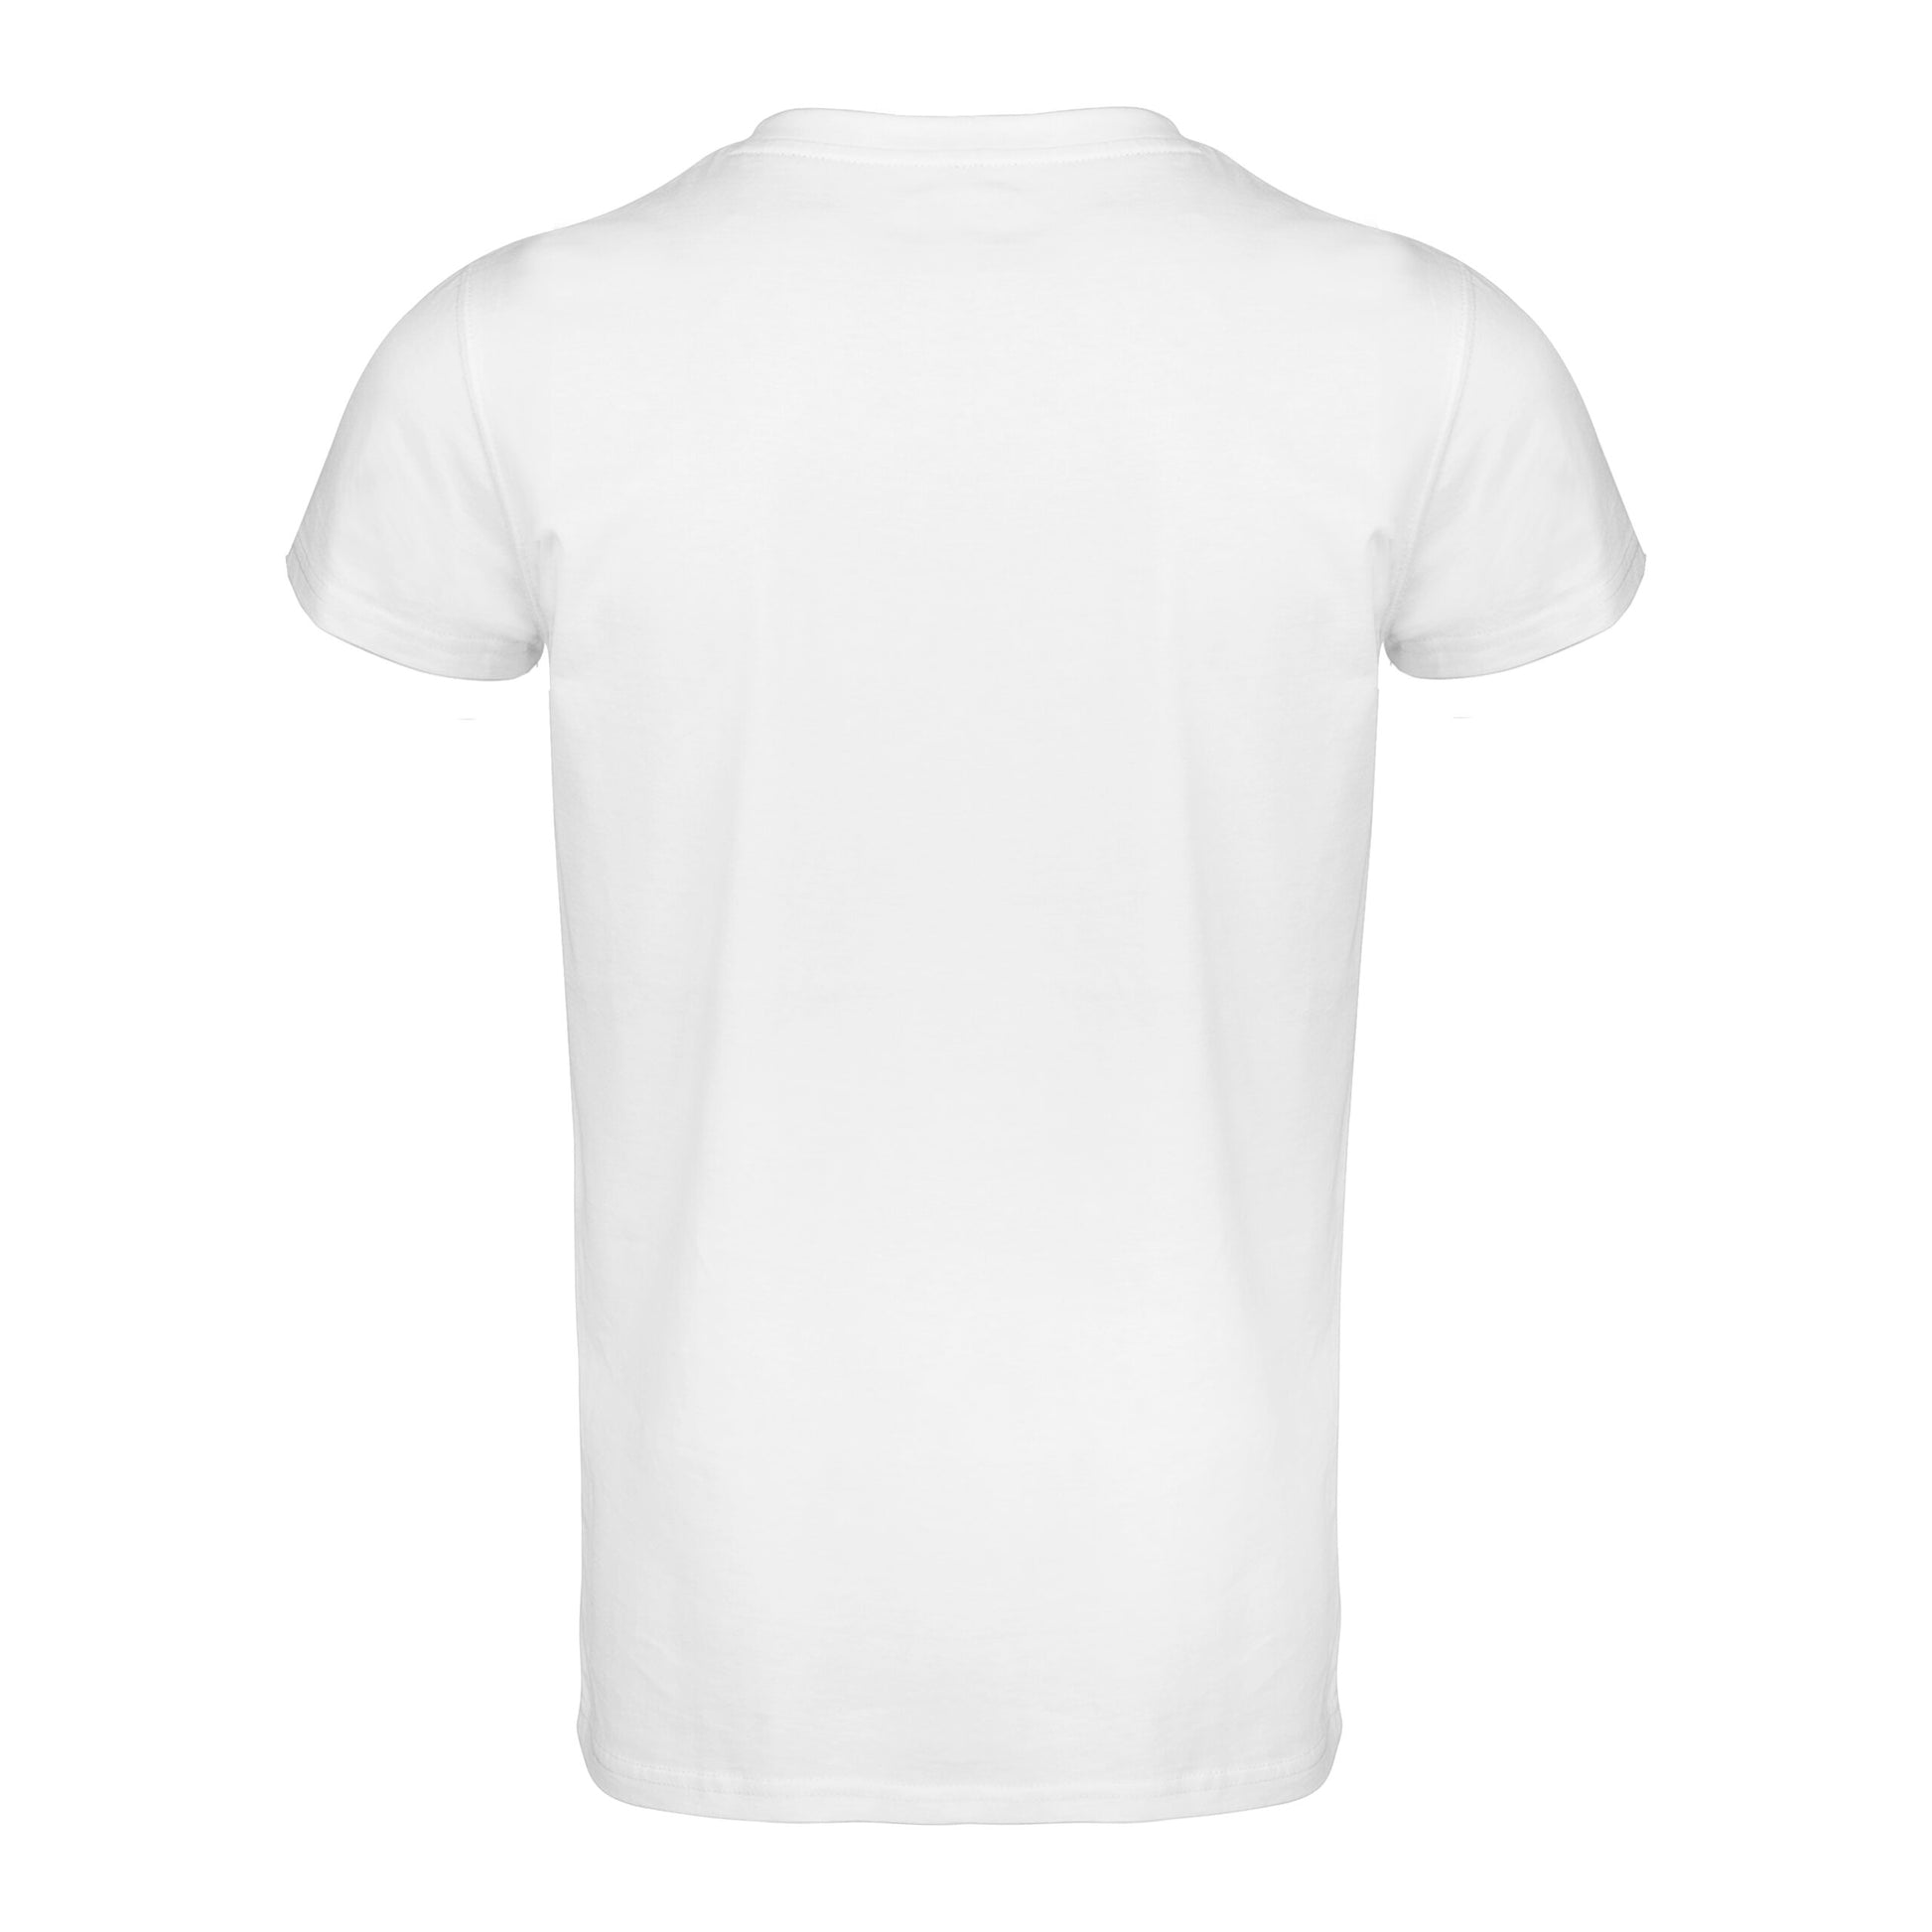 Clts21 Bjj Adidas Jiu Jitsu T Shirt White 02